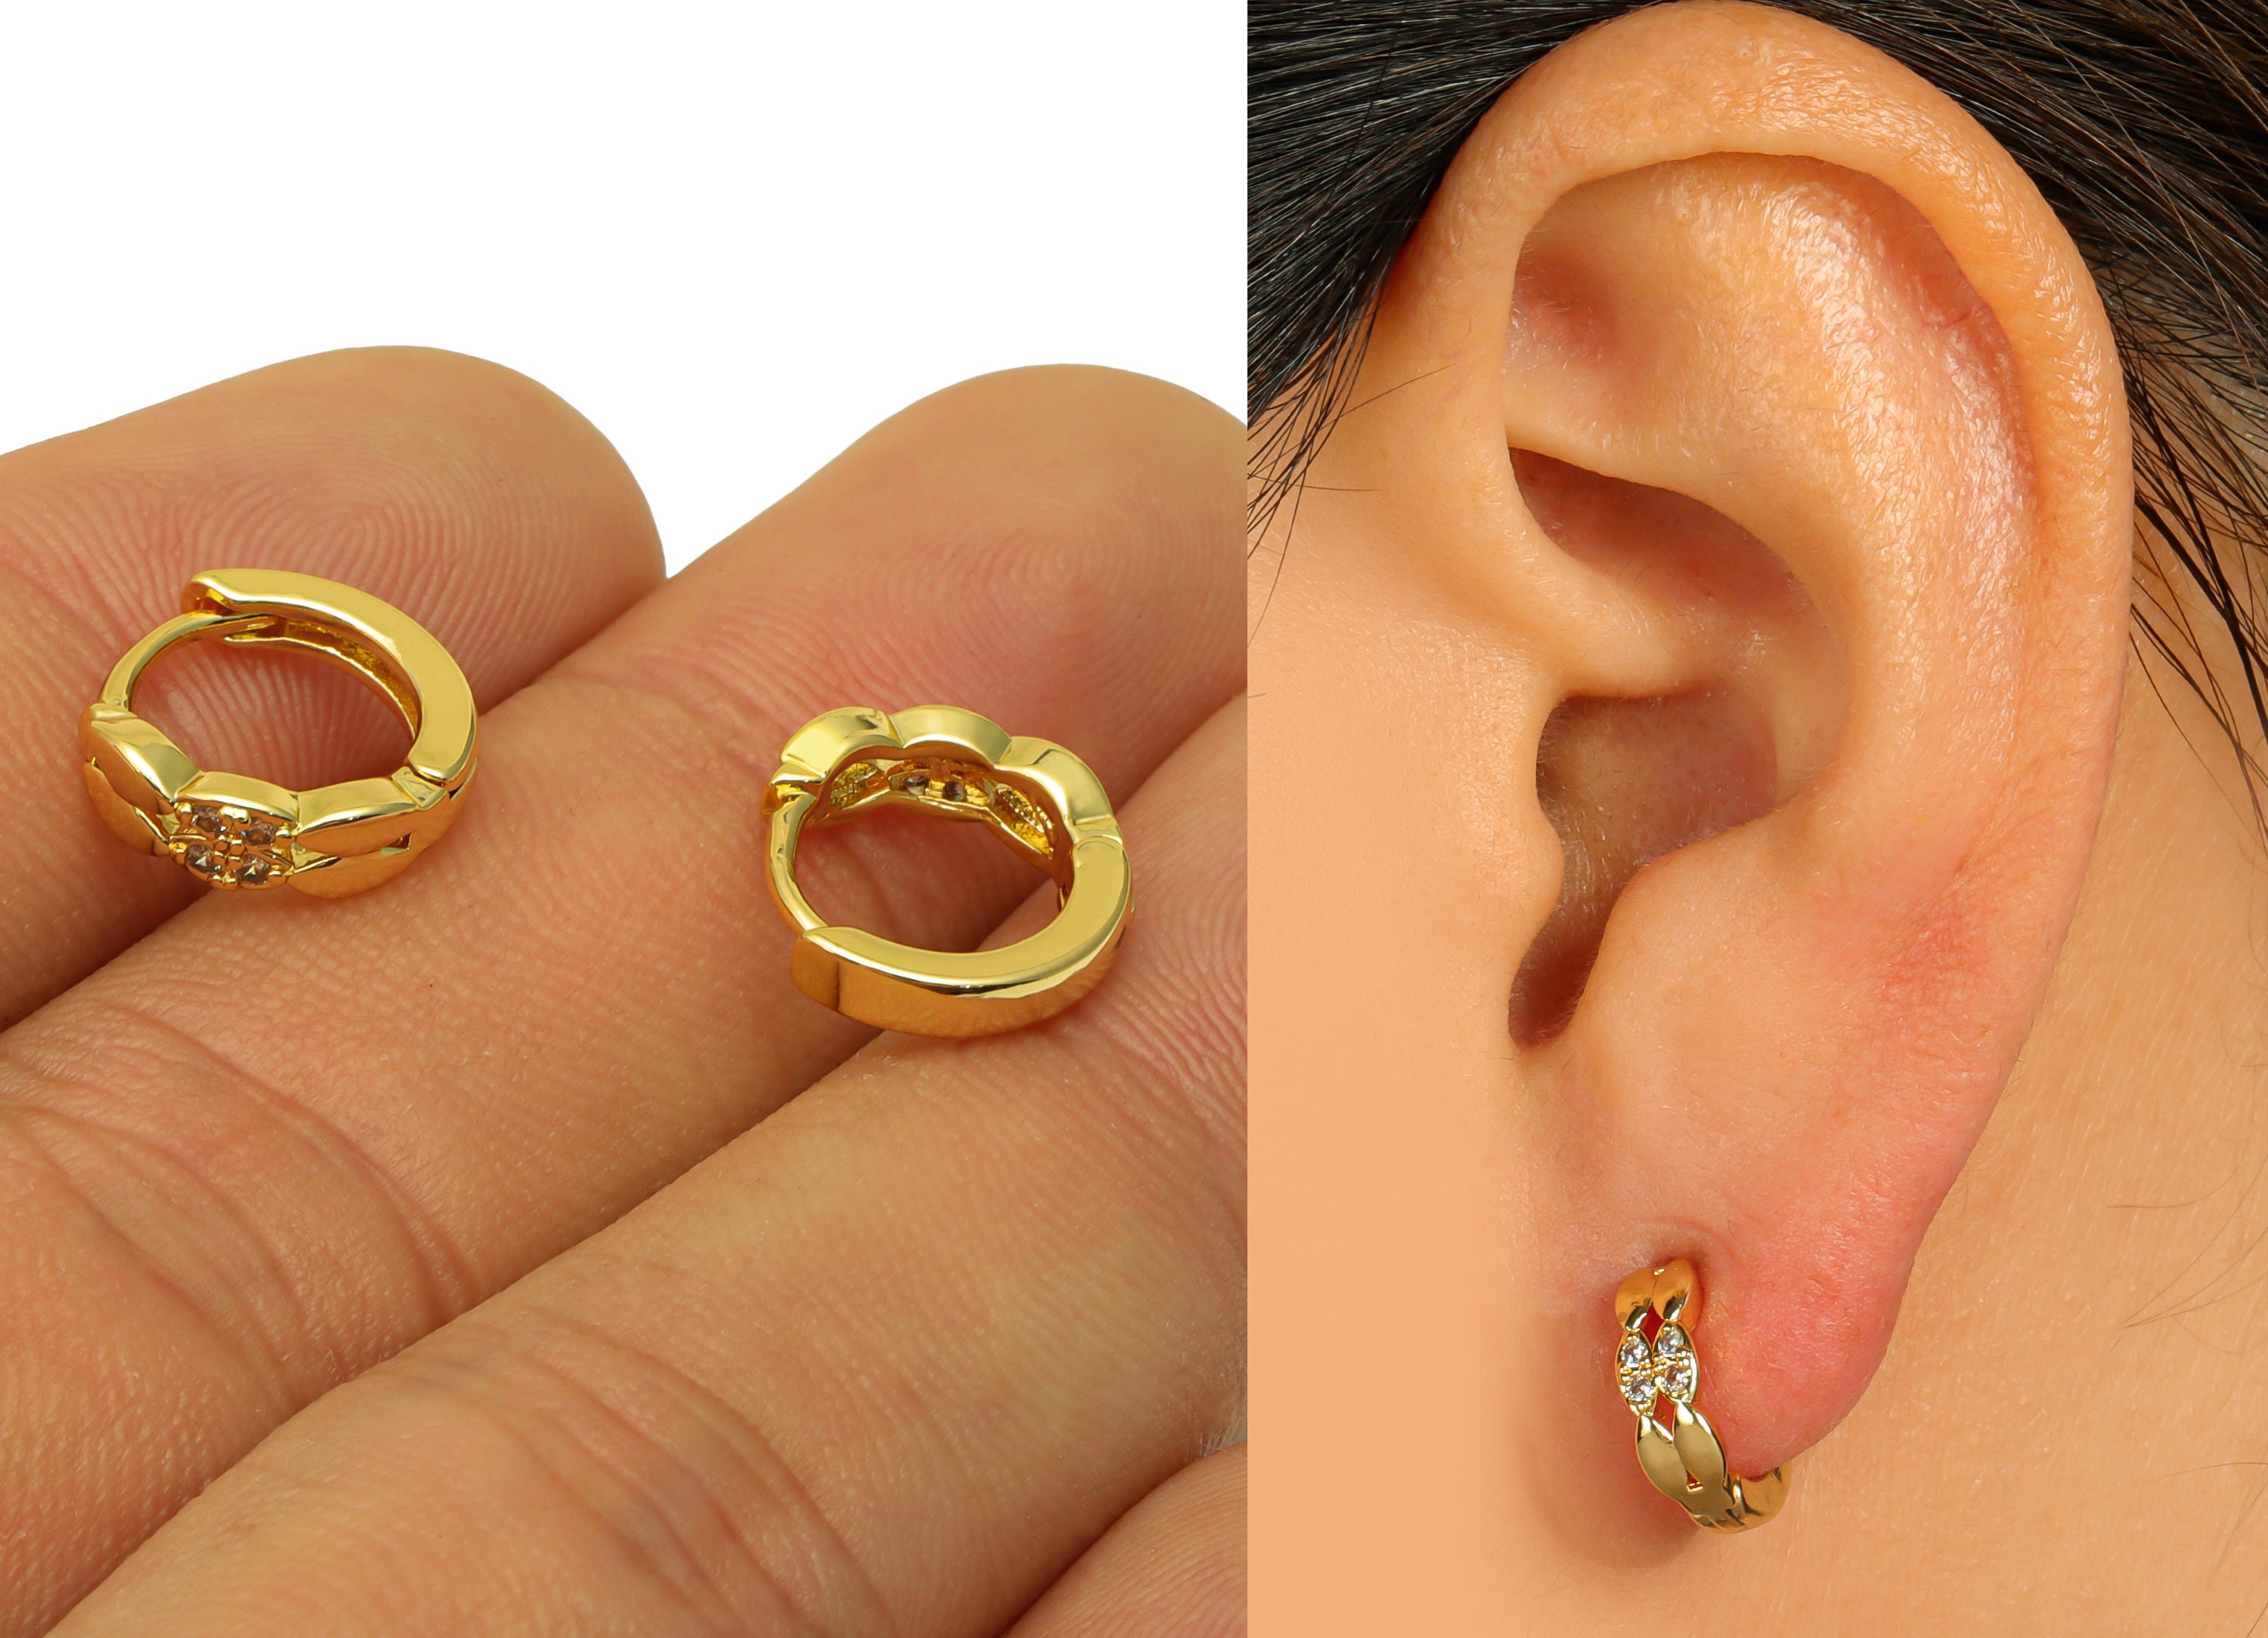 Honeyhandy Brass Huggie Hoop Earring Findings, for Jewelry Making